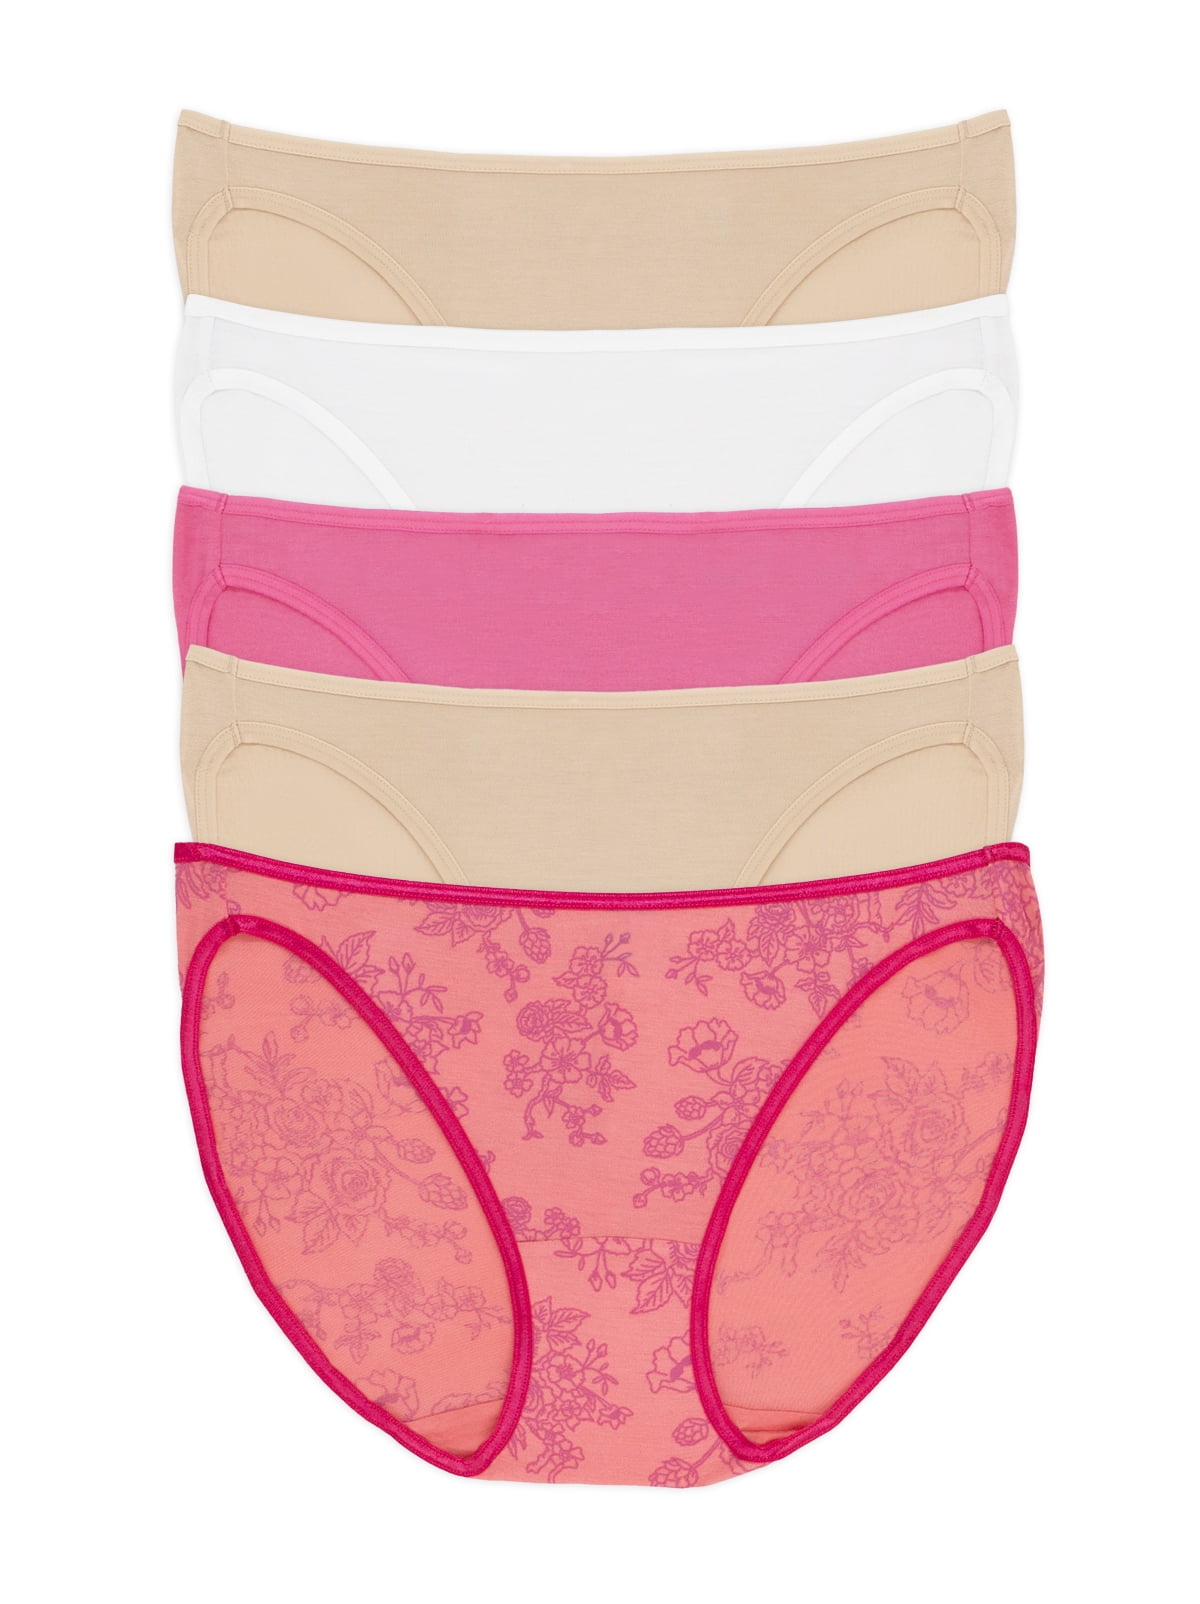 Felina Smooth Low Rise Bikini Panties - Seamless Underwear for Women,  Panties for Women (5-Pack) (Cheetahlicious, X-Large) 